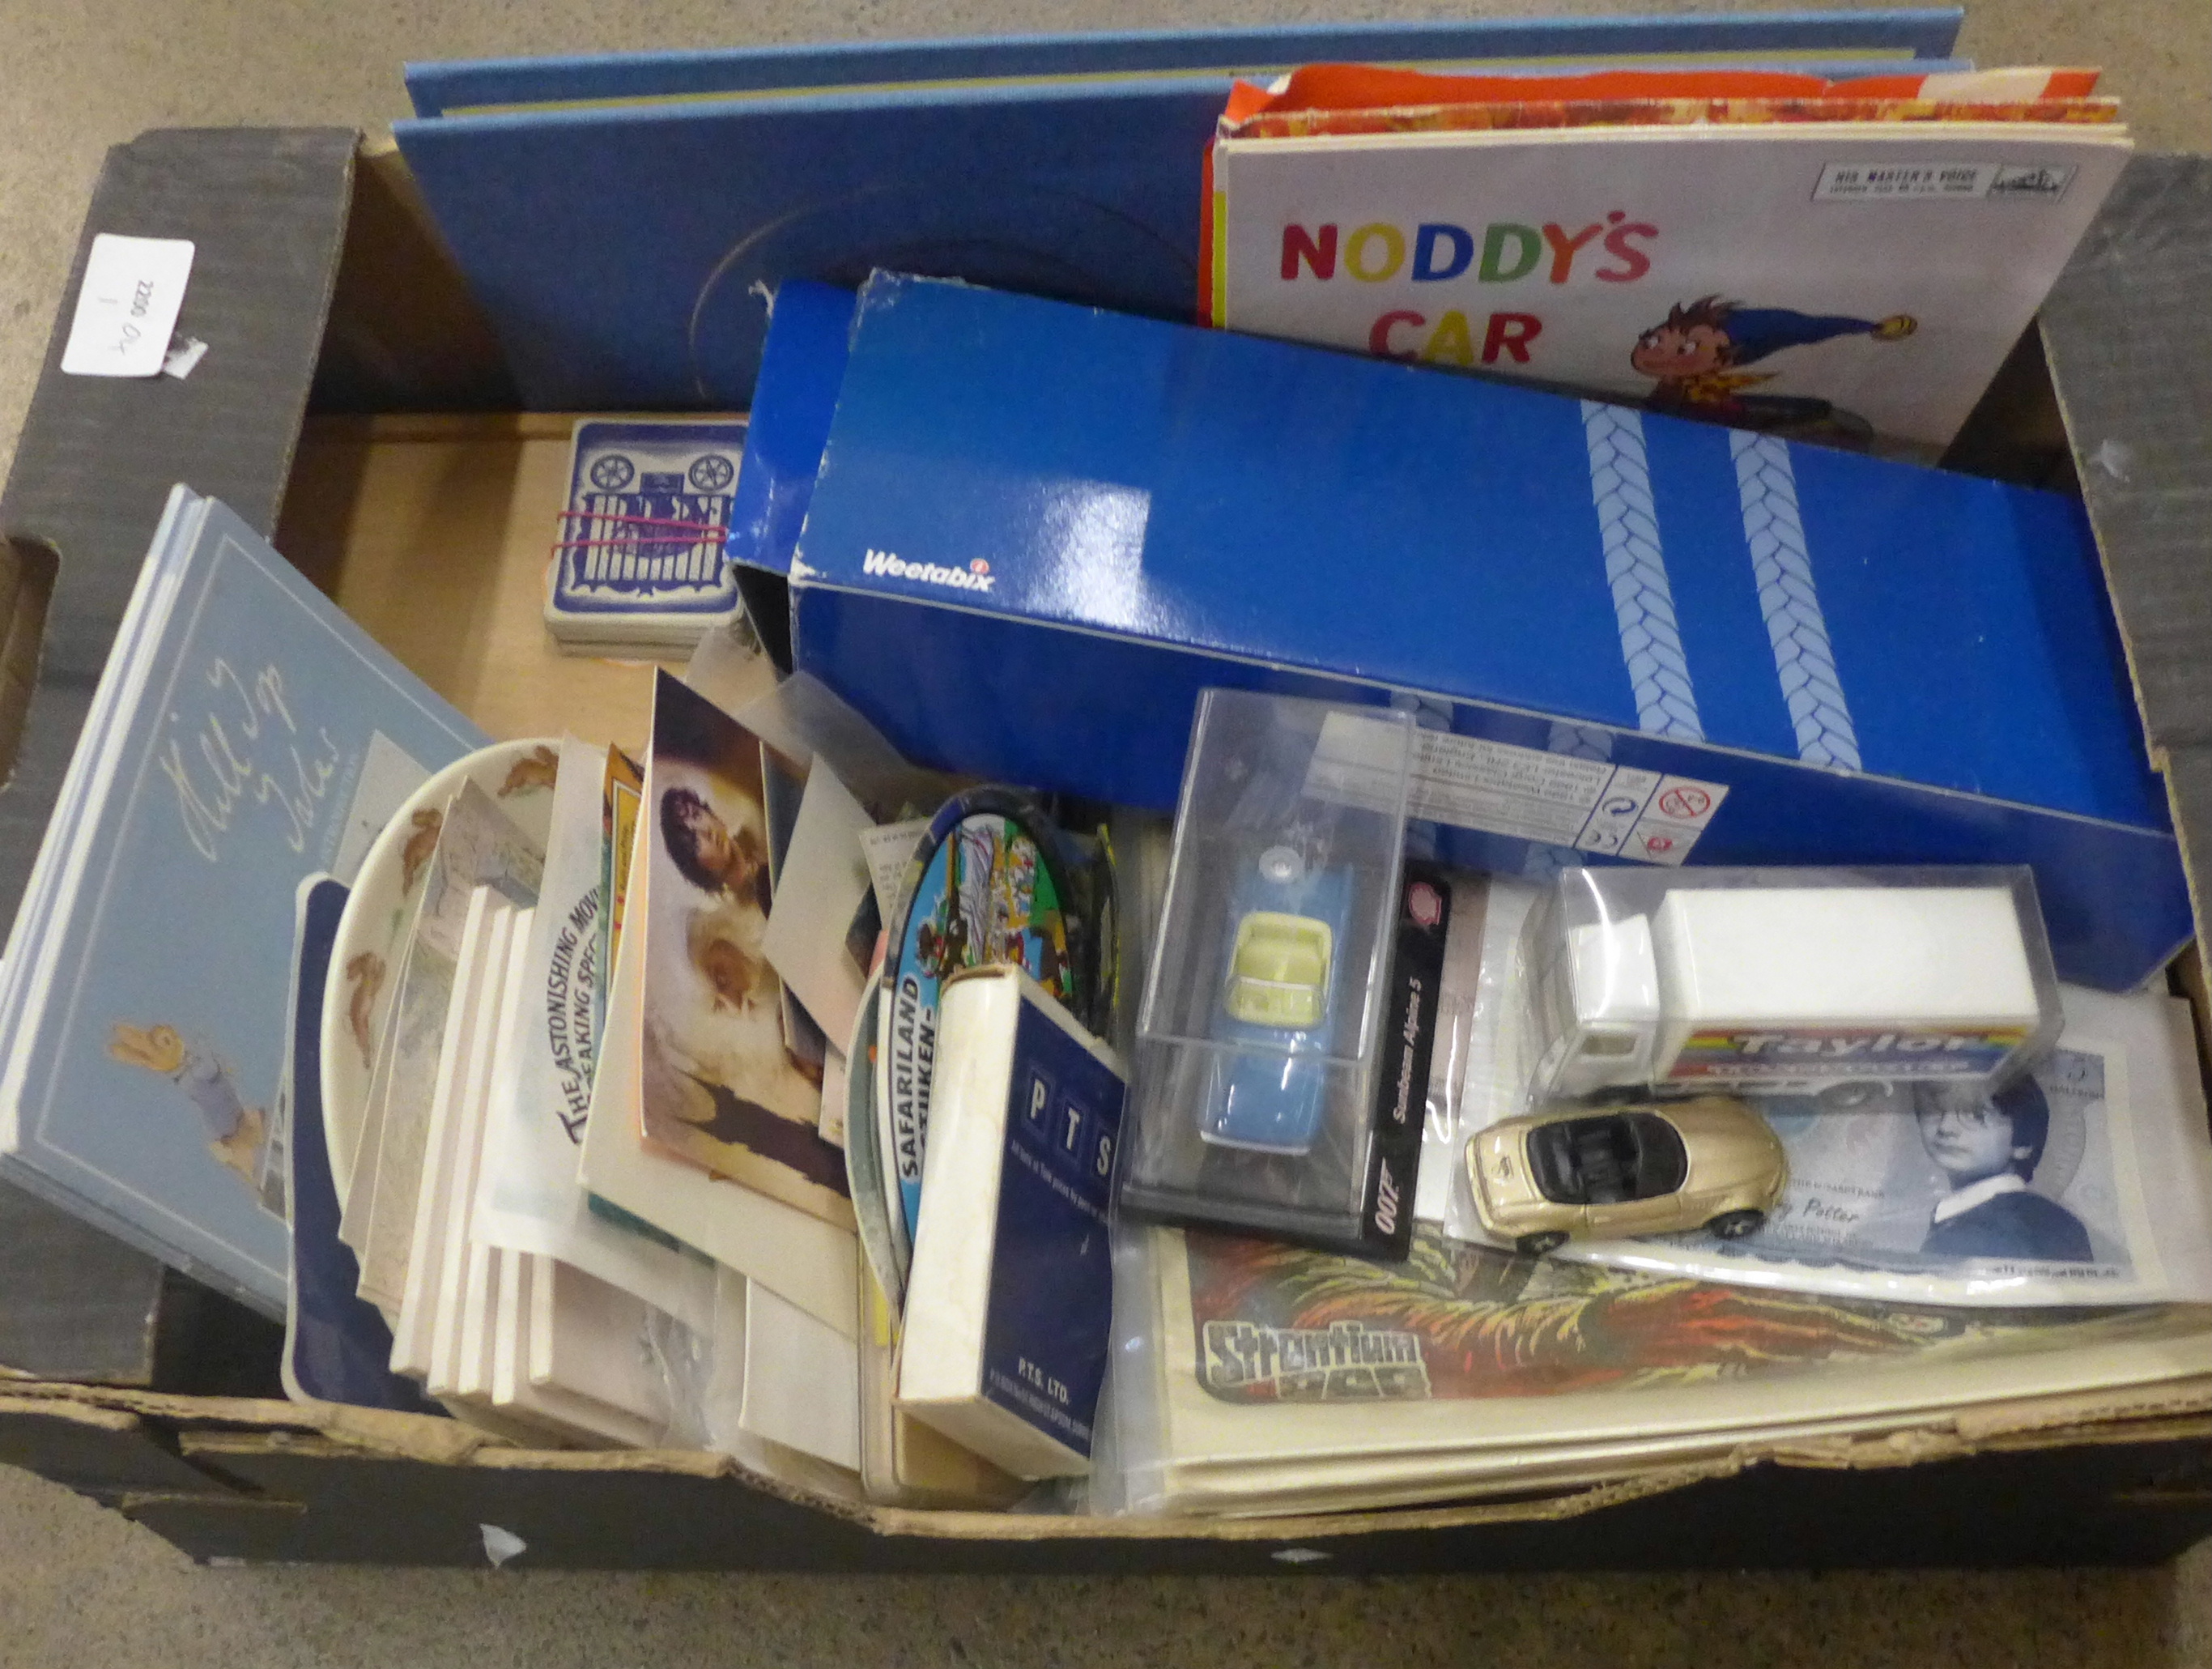 A box of comics, toys, children's records, etc.